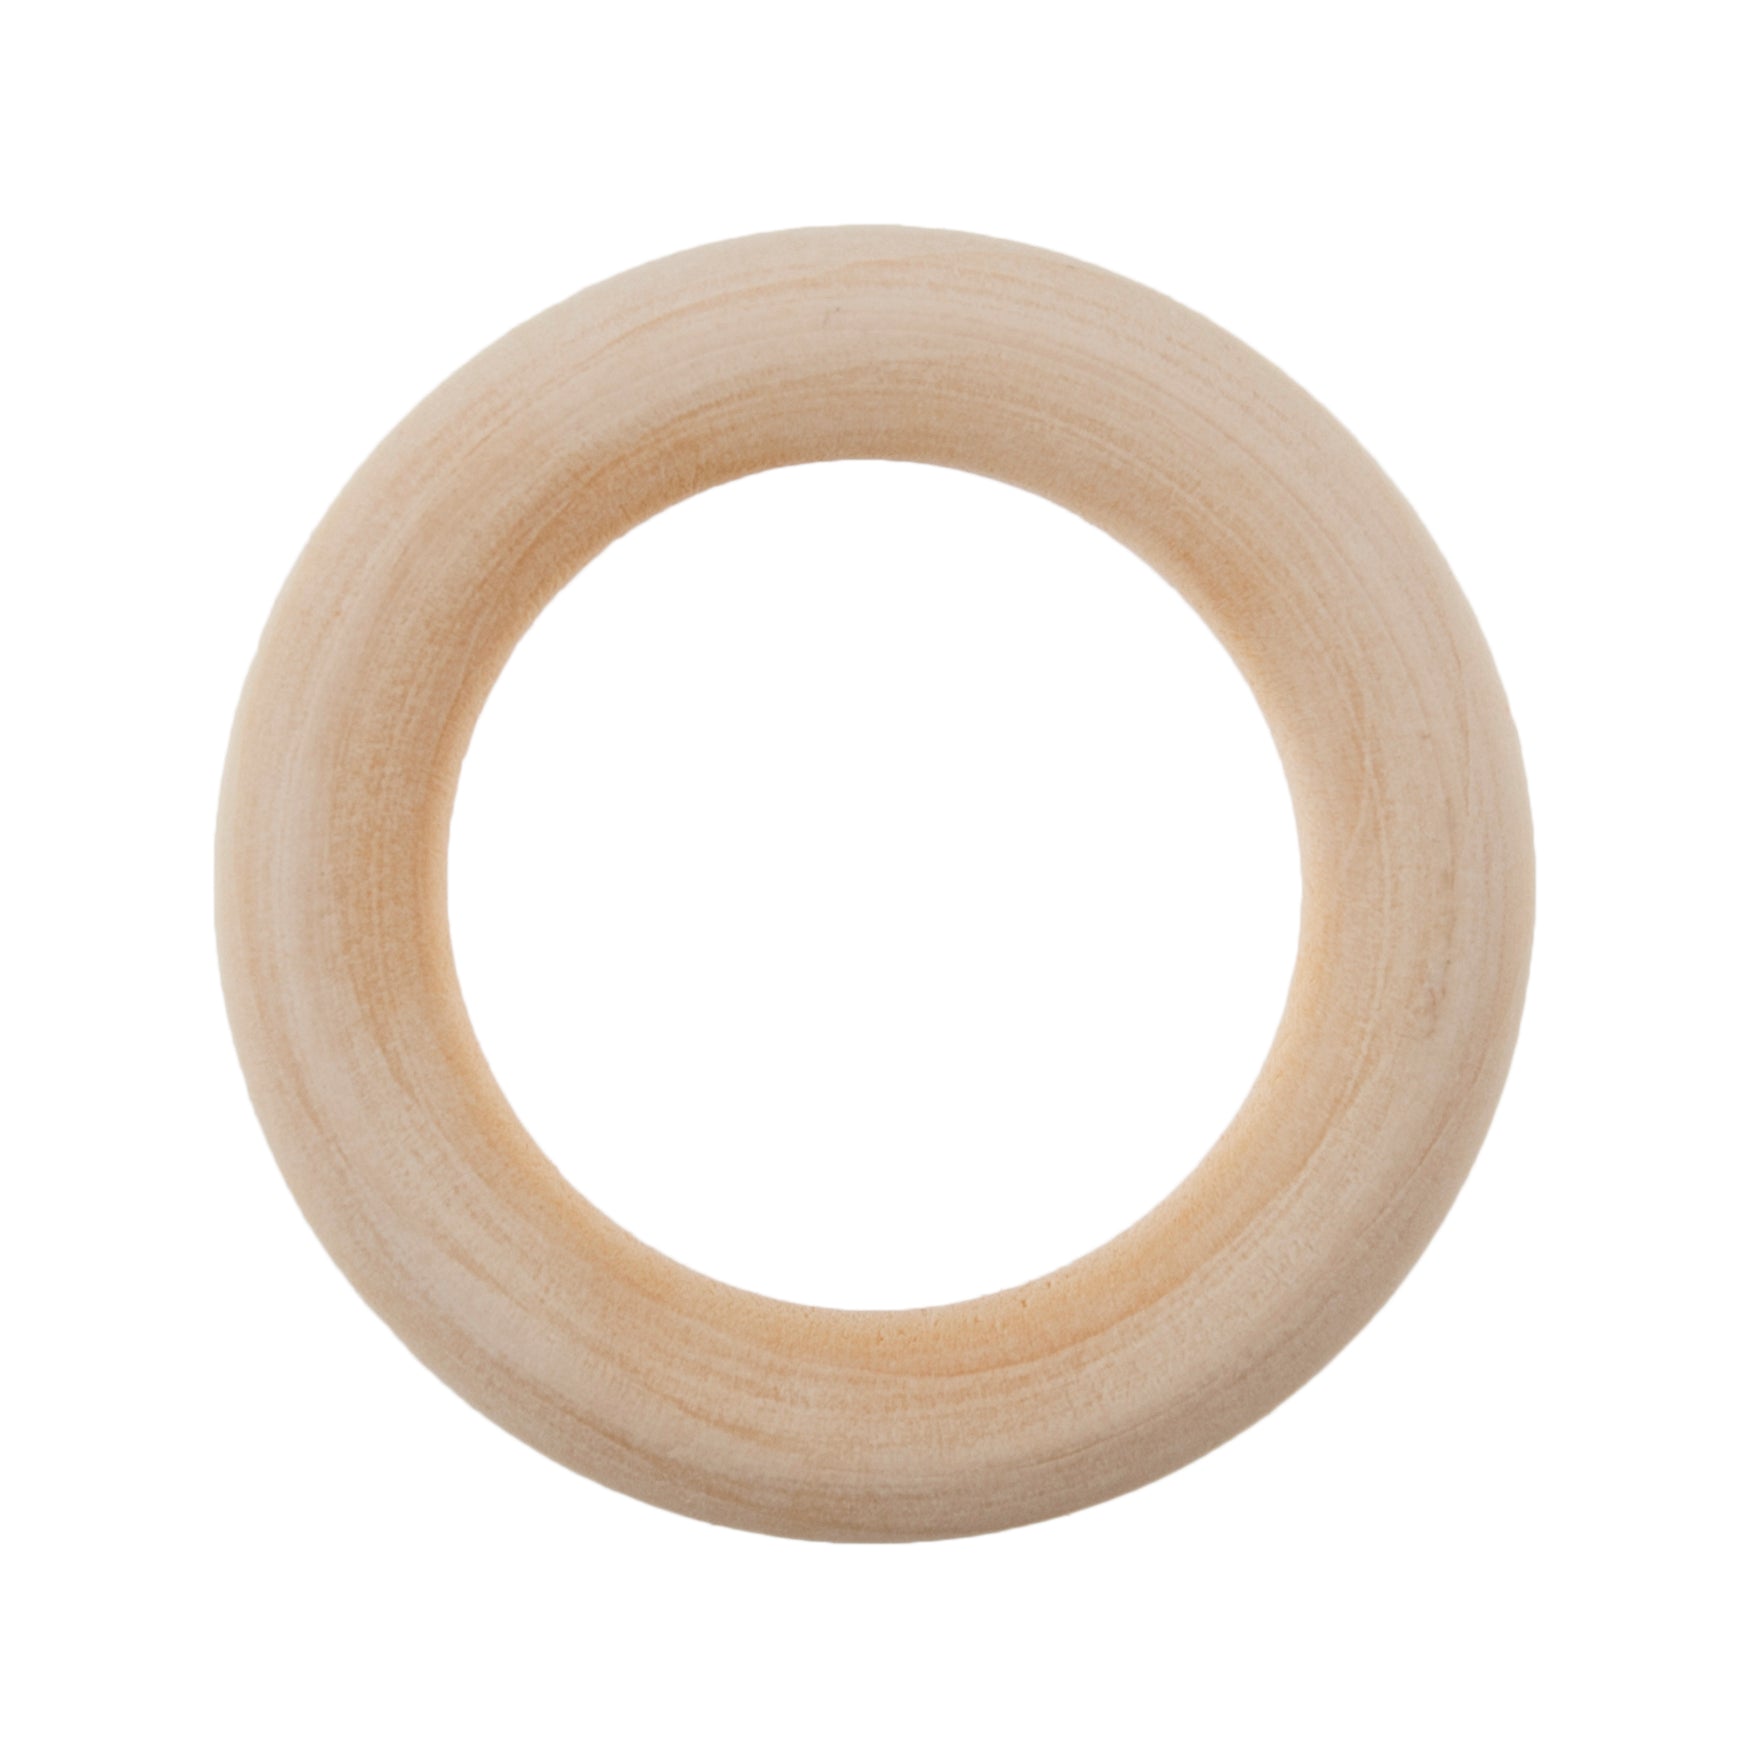 Wooden Craft Ring 4.5cm